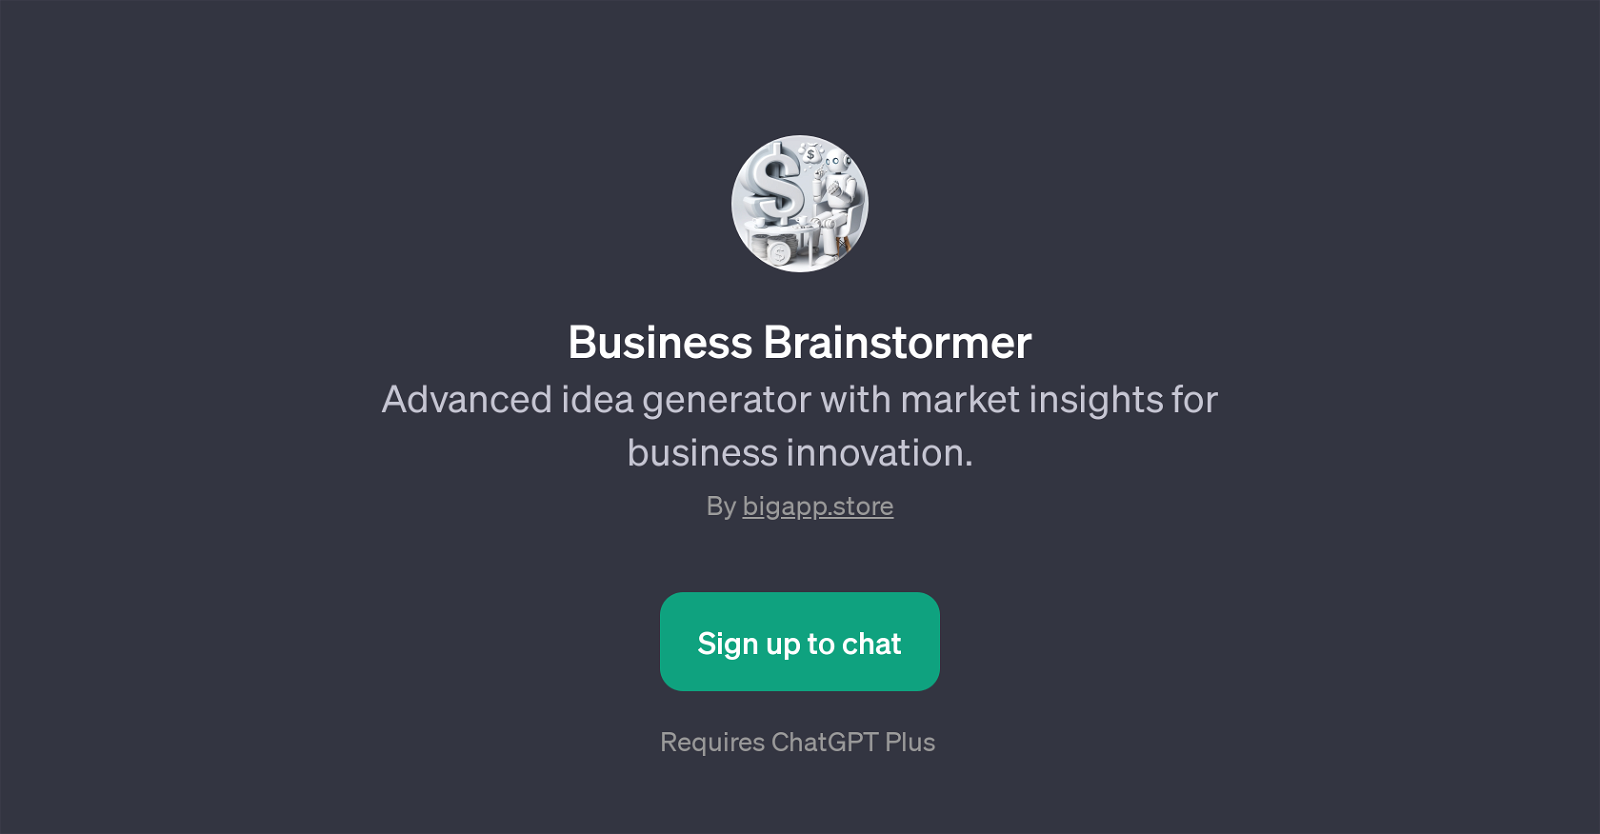 Business Brainstormer website